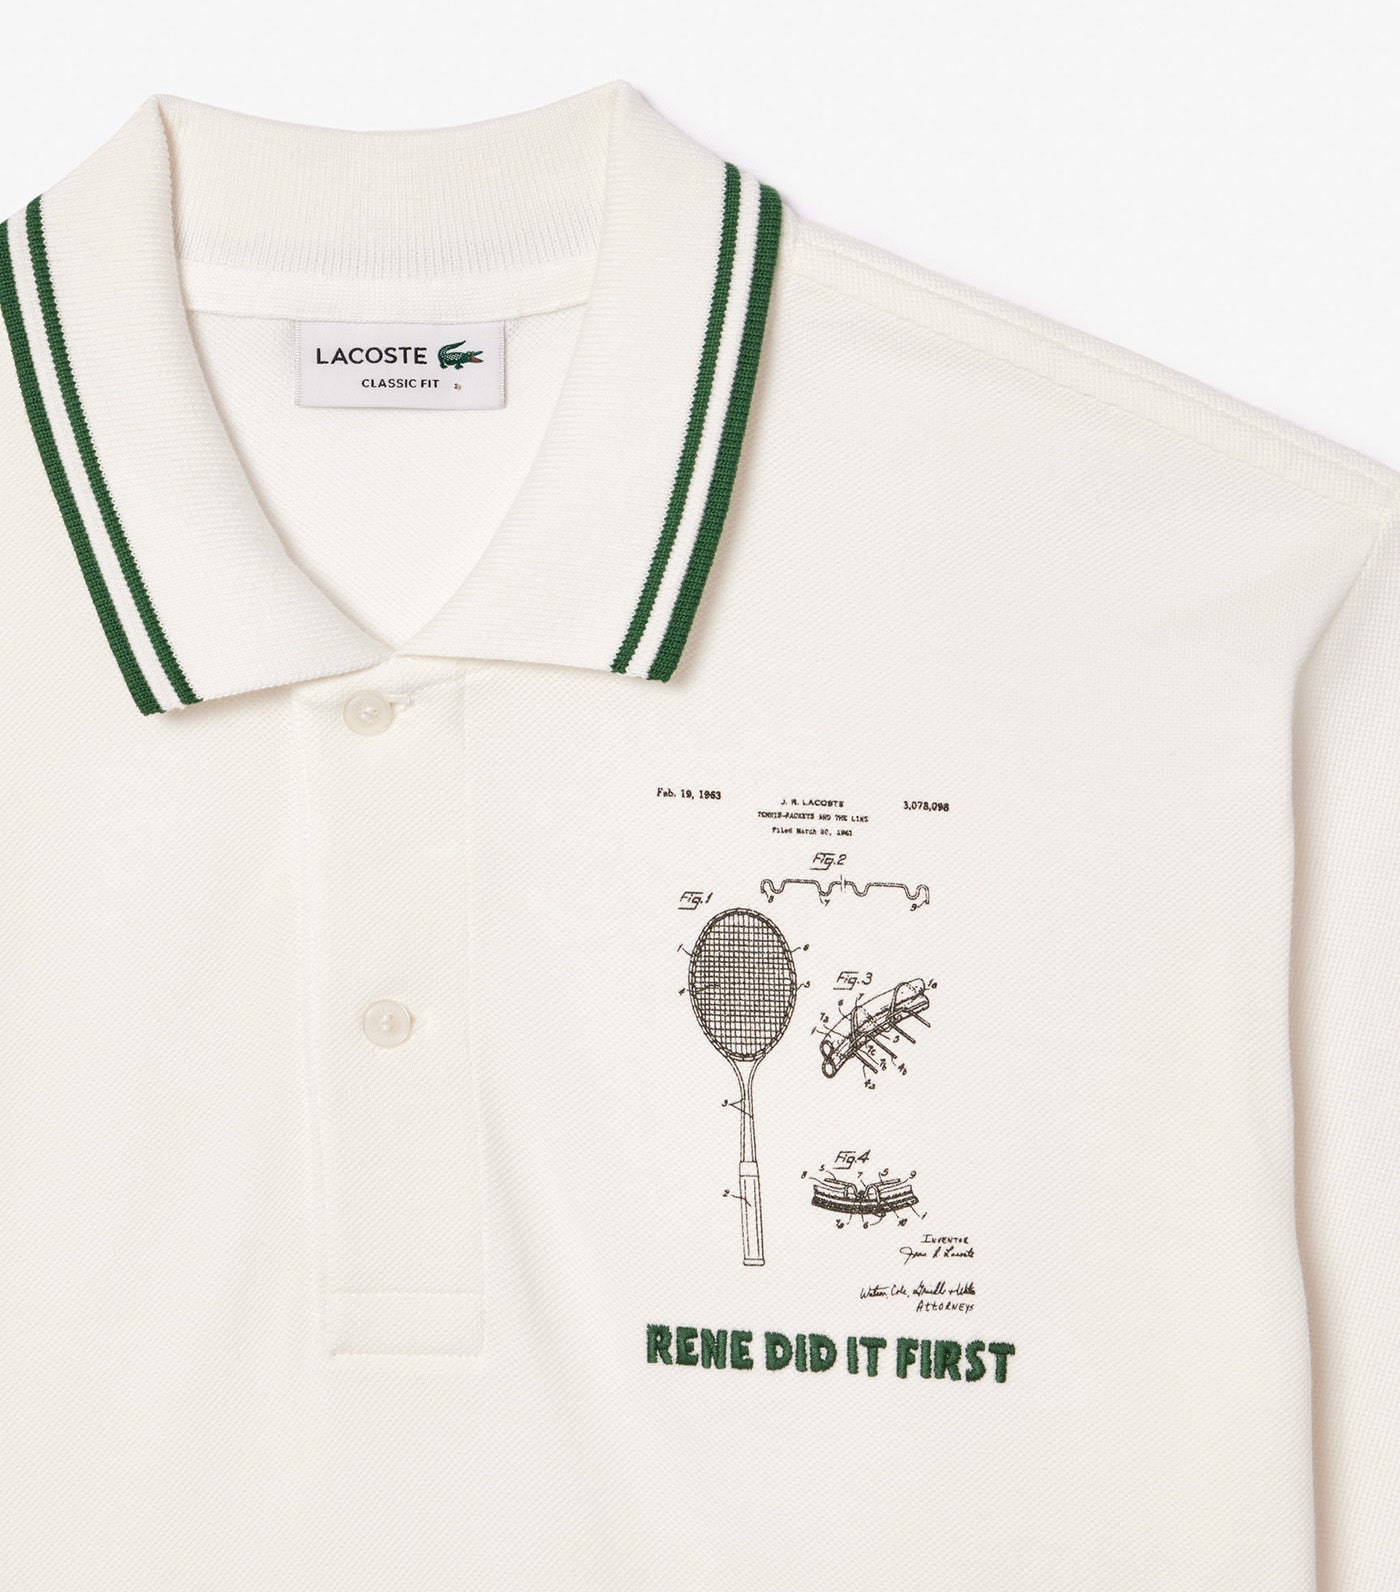 Original L.12.12 Embroidered Patent Cotton Polo Shirt